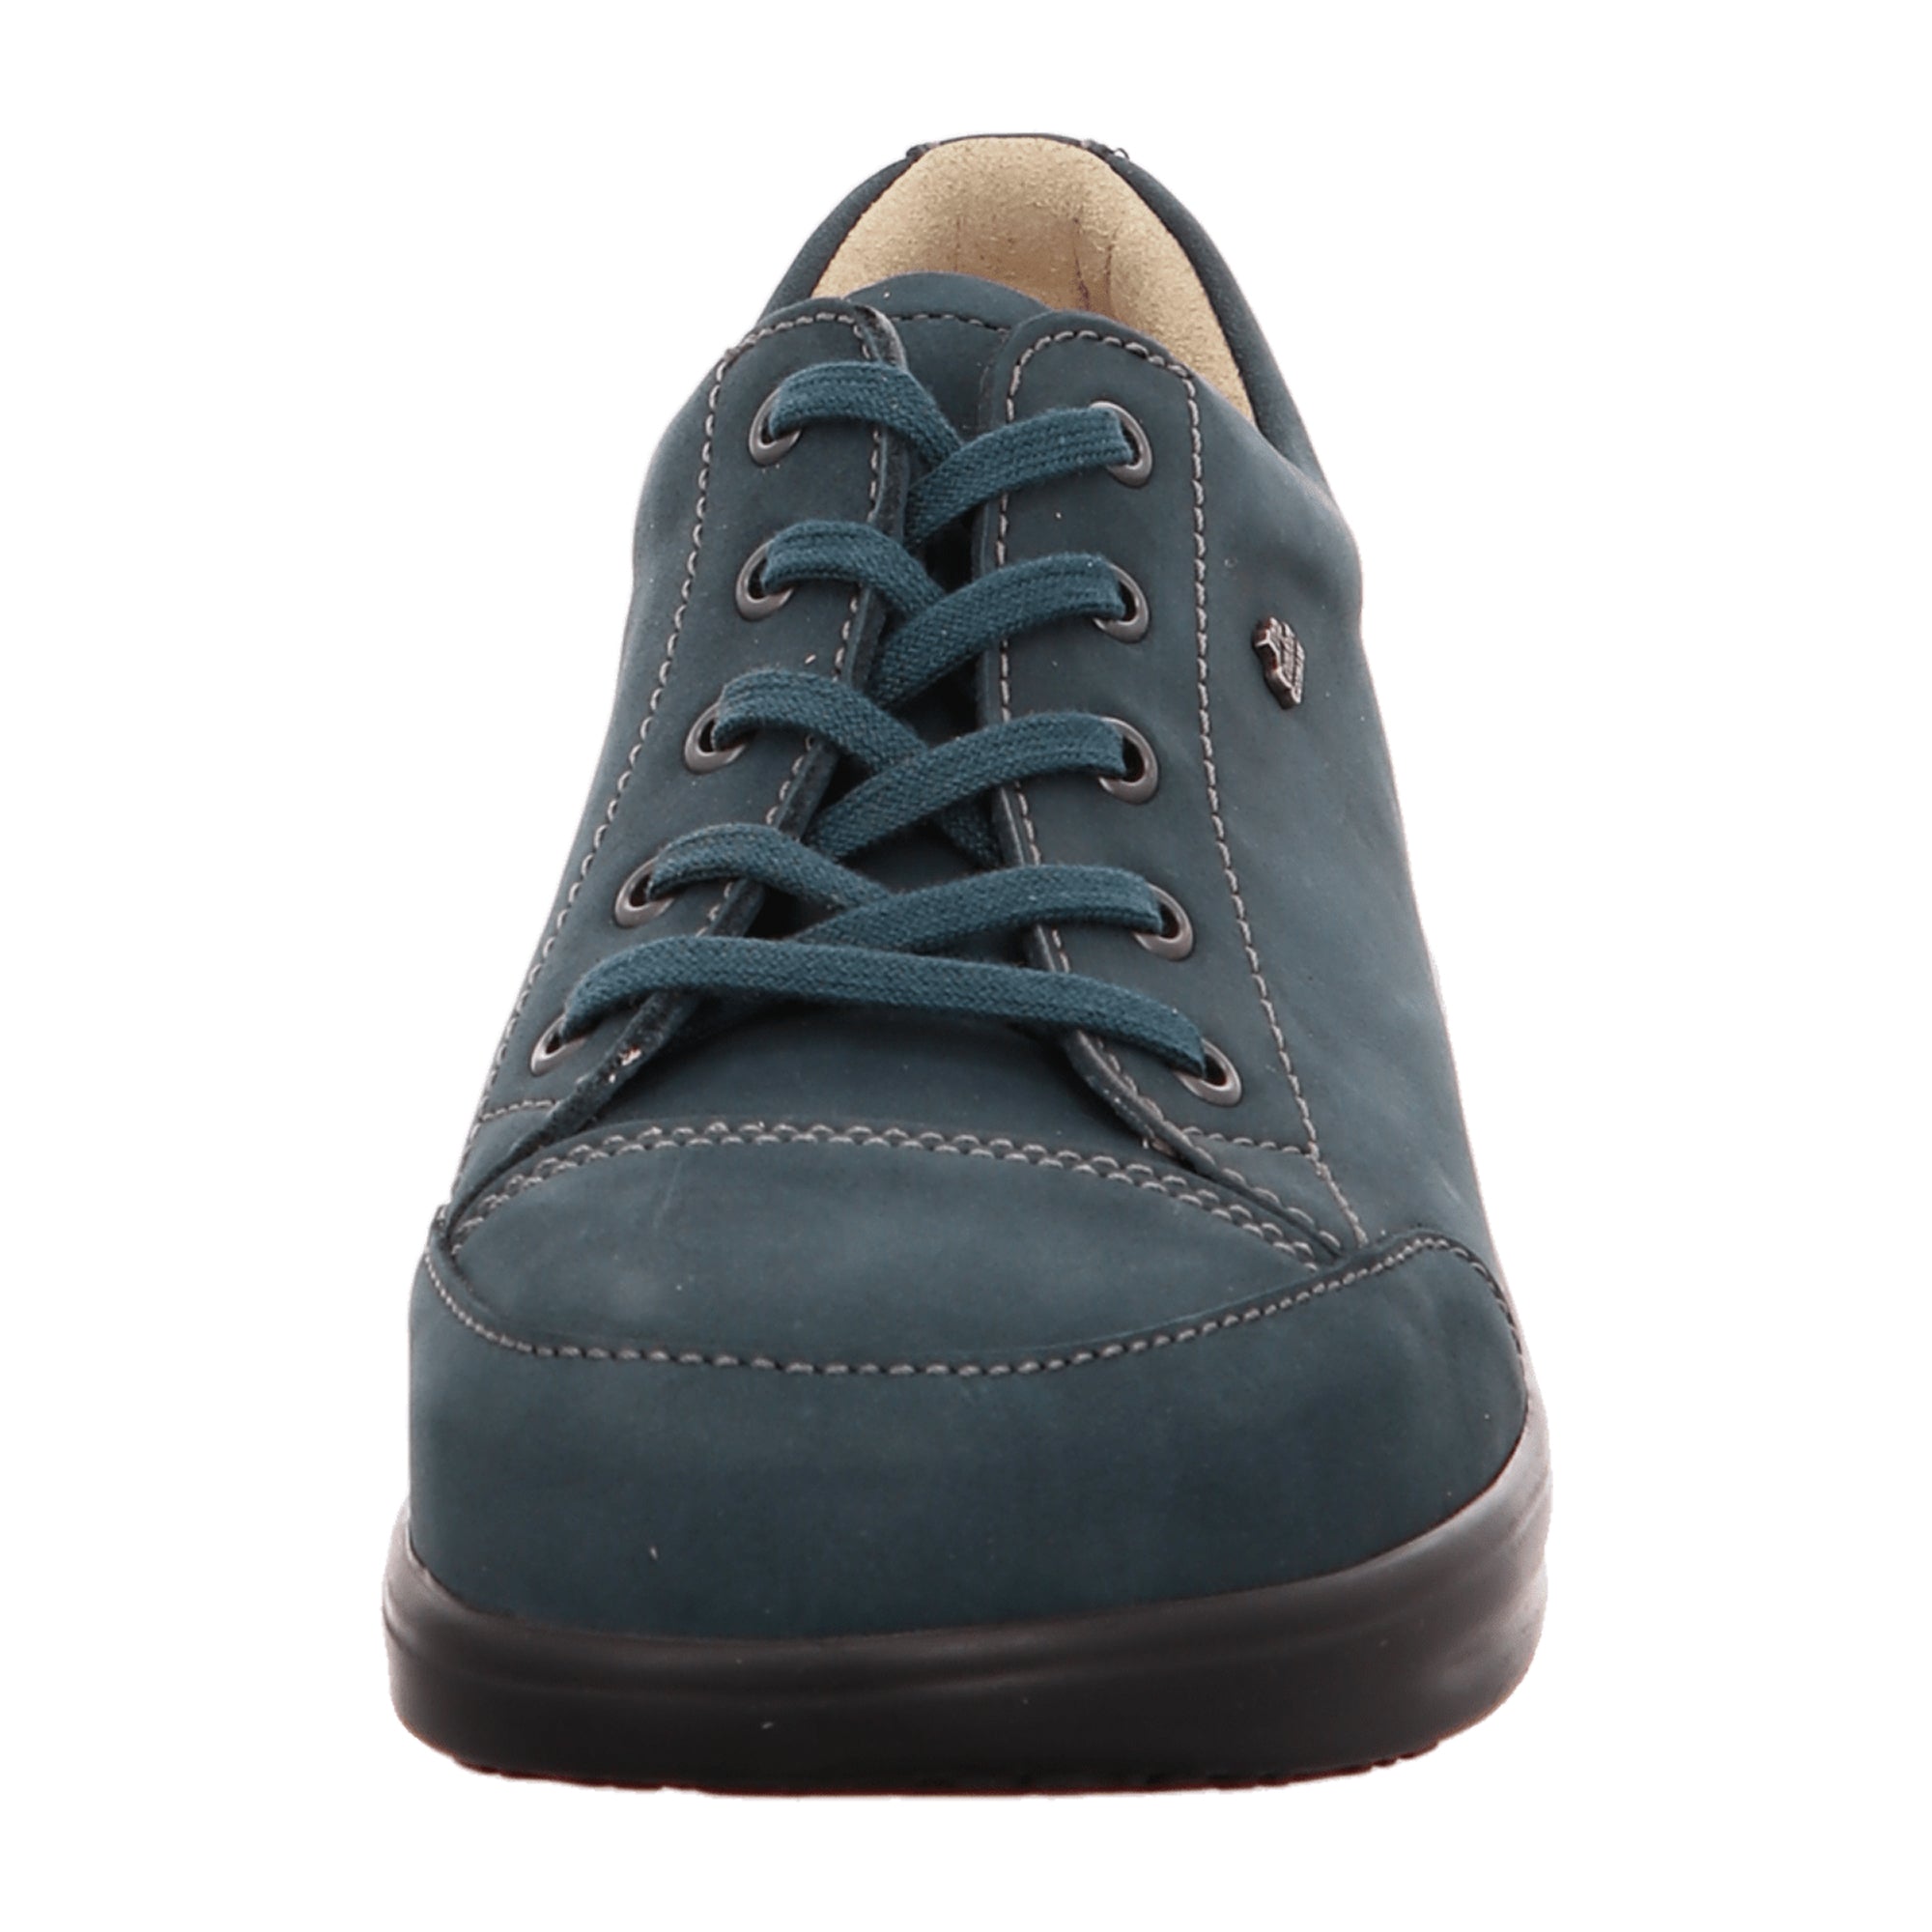 Finn Comfort Ikebukuro Women's Comfort Shoes - Stylish Blue Design